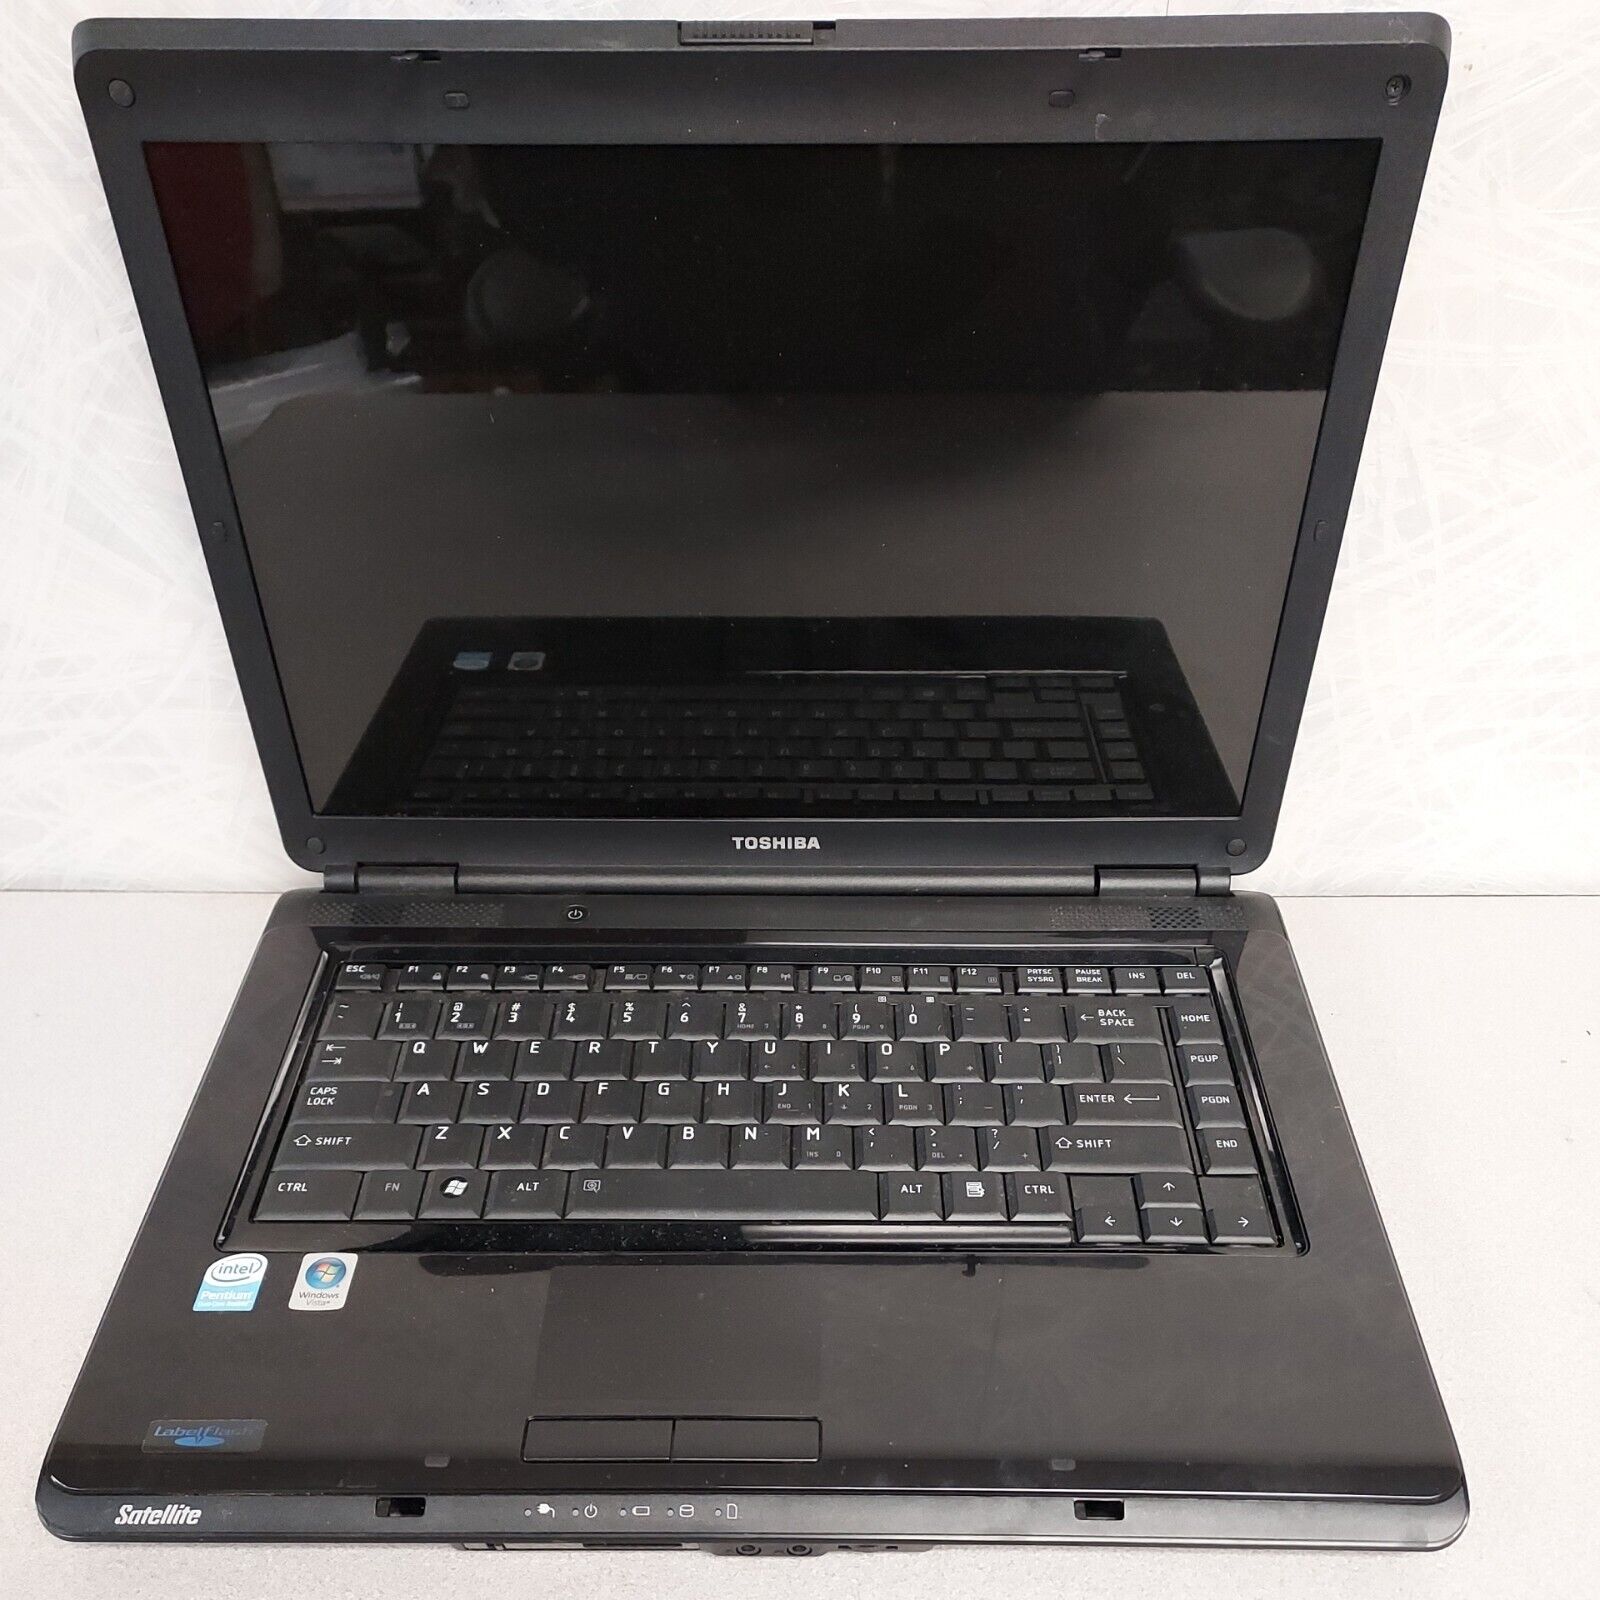 Toshiba L305-S5891 Laptop - Pentium T3200 - NO RAM/HDD - PARTS